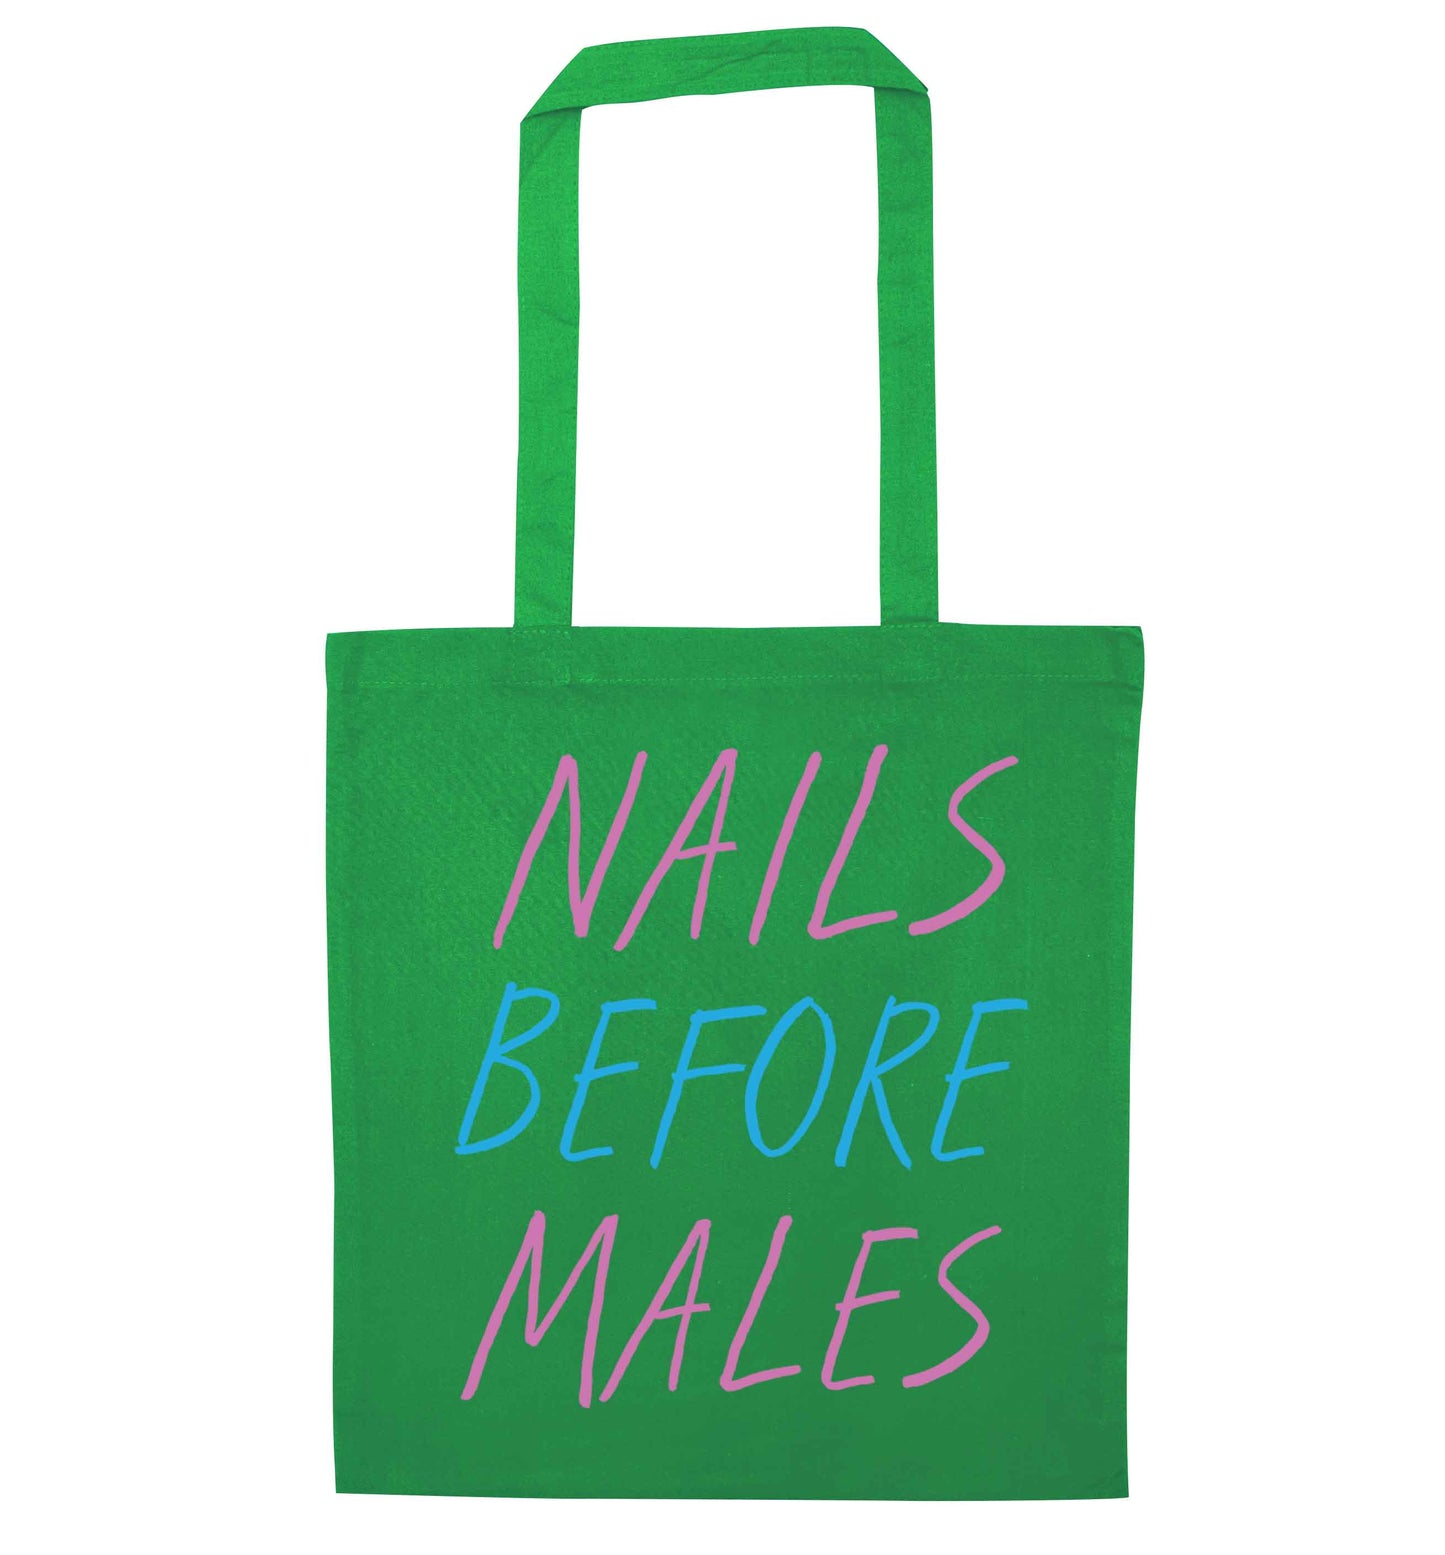 Nails before males green tote bag